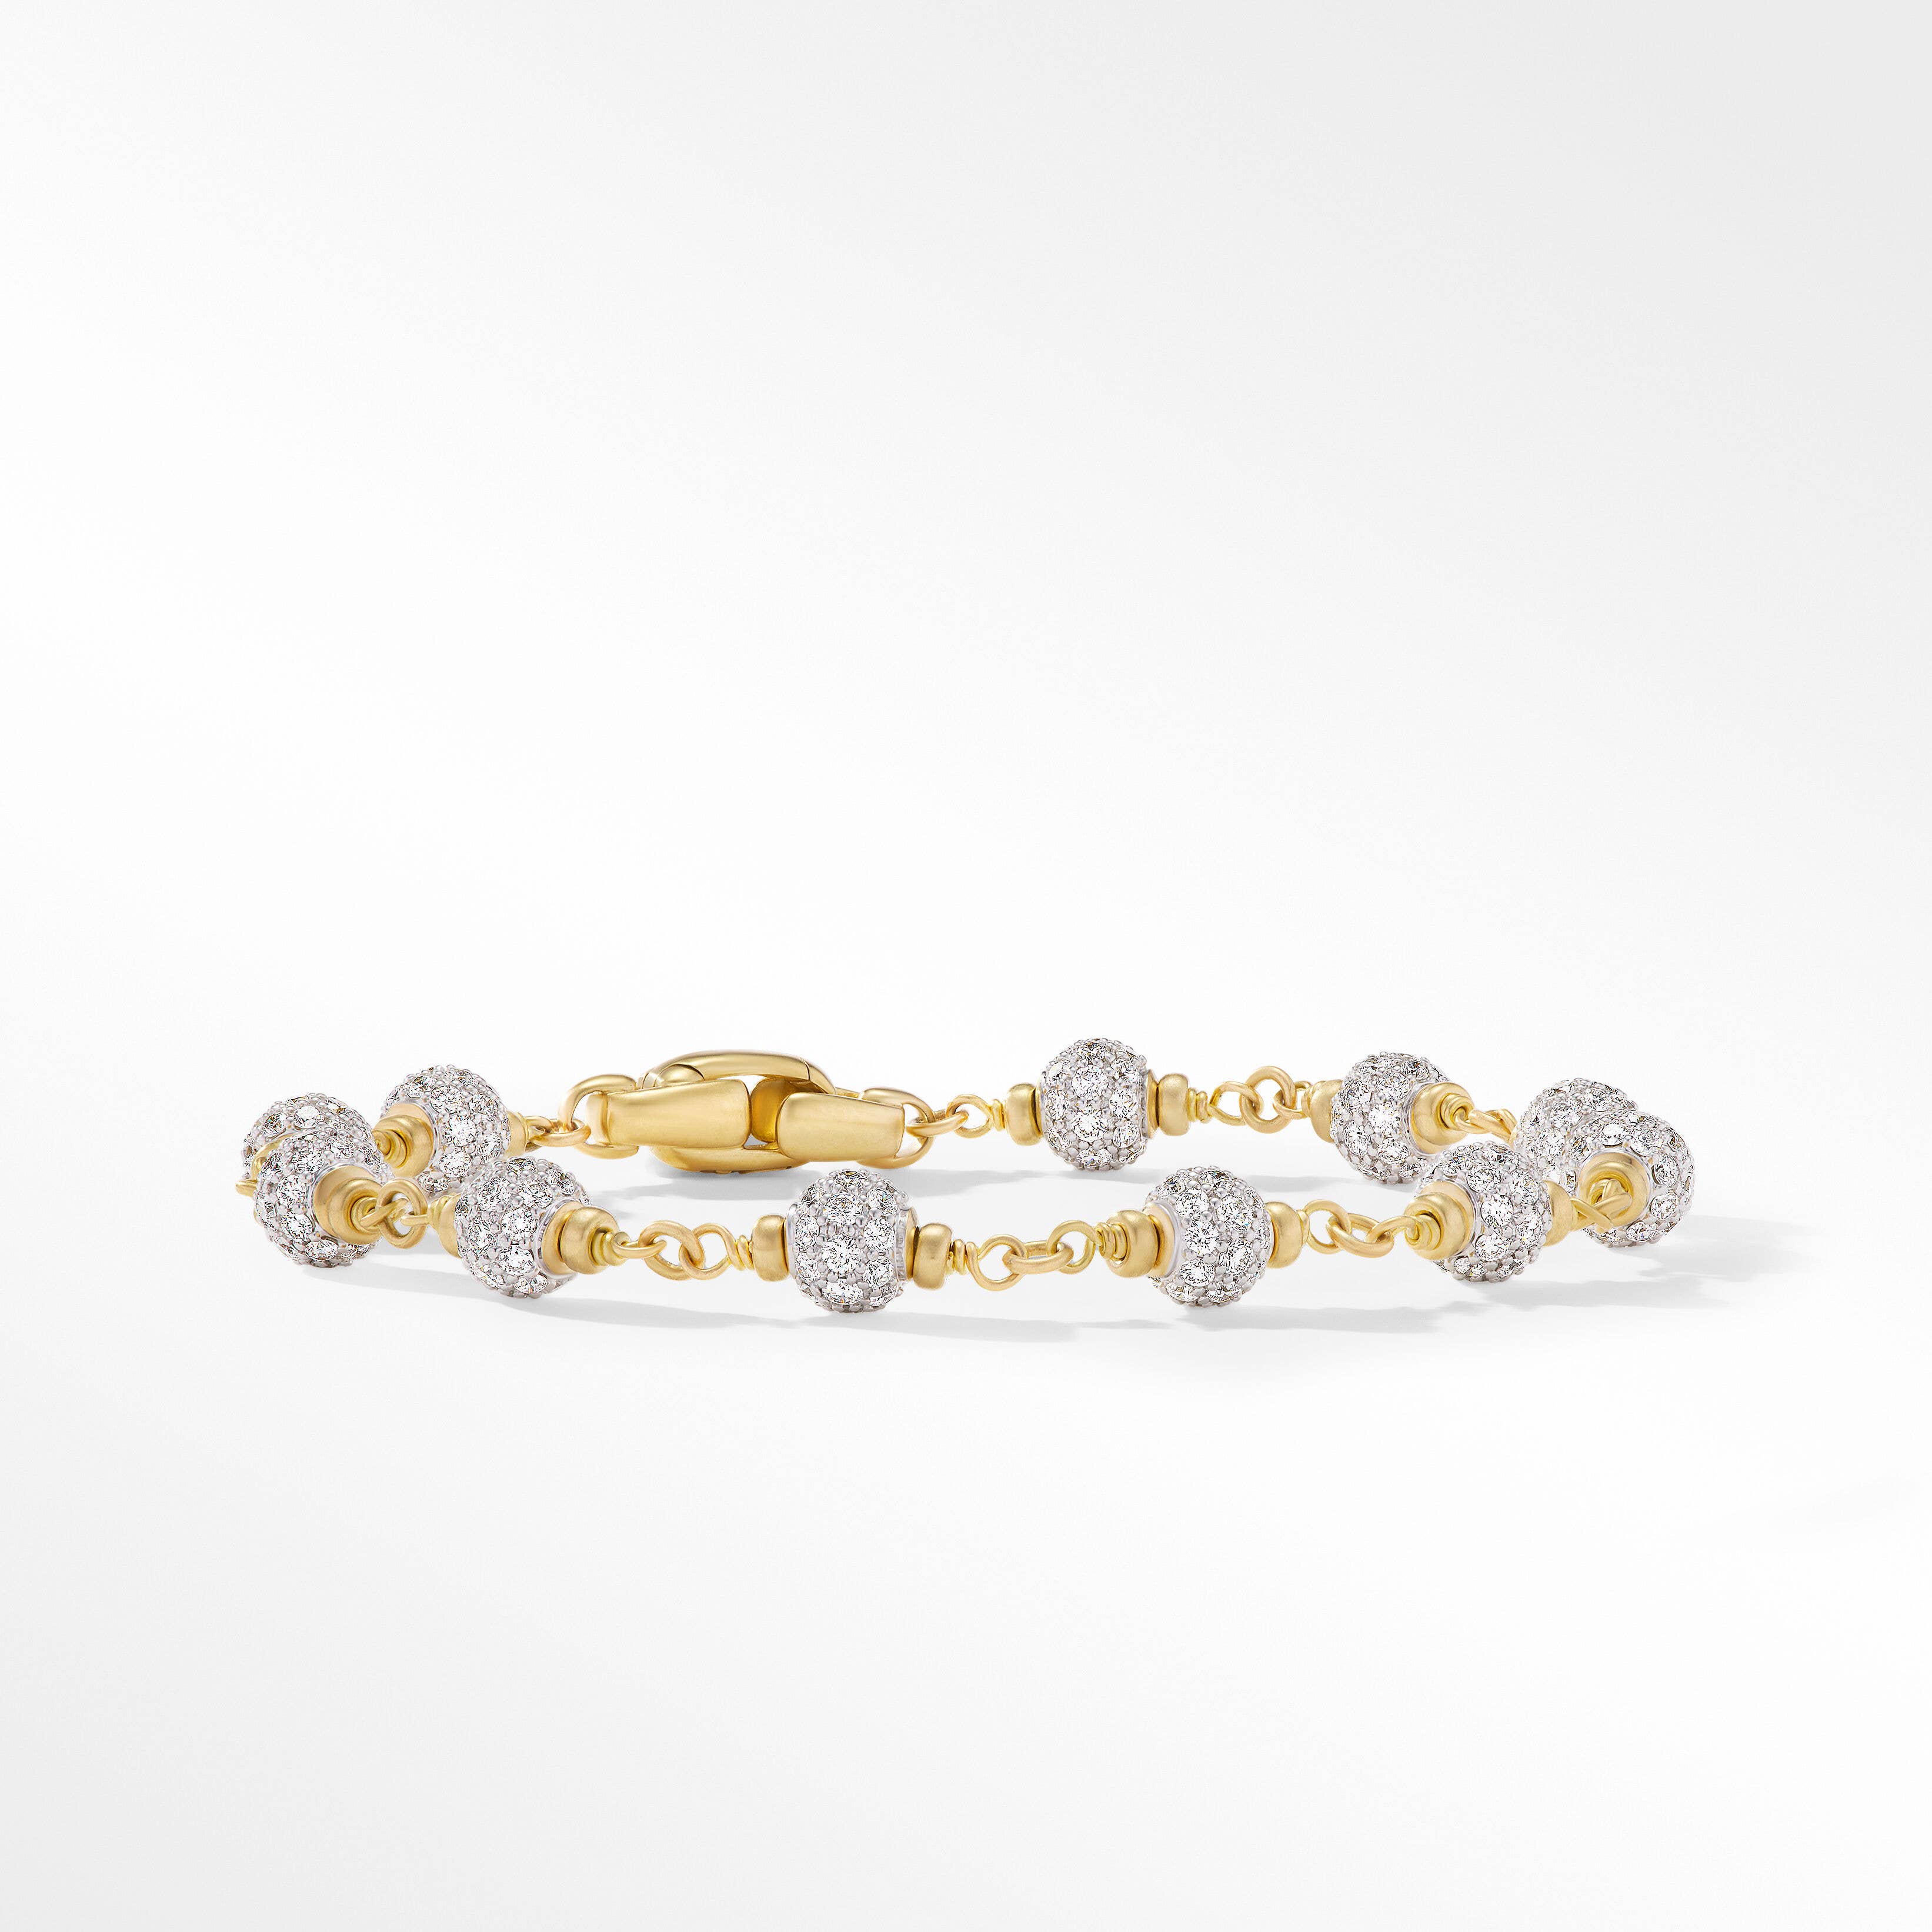 Spiritual Beads Rosary Bracelet in 18K Yellow Gold with Pavé Diamonds